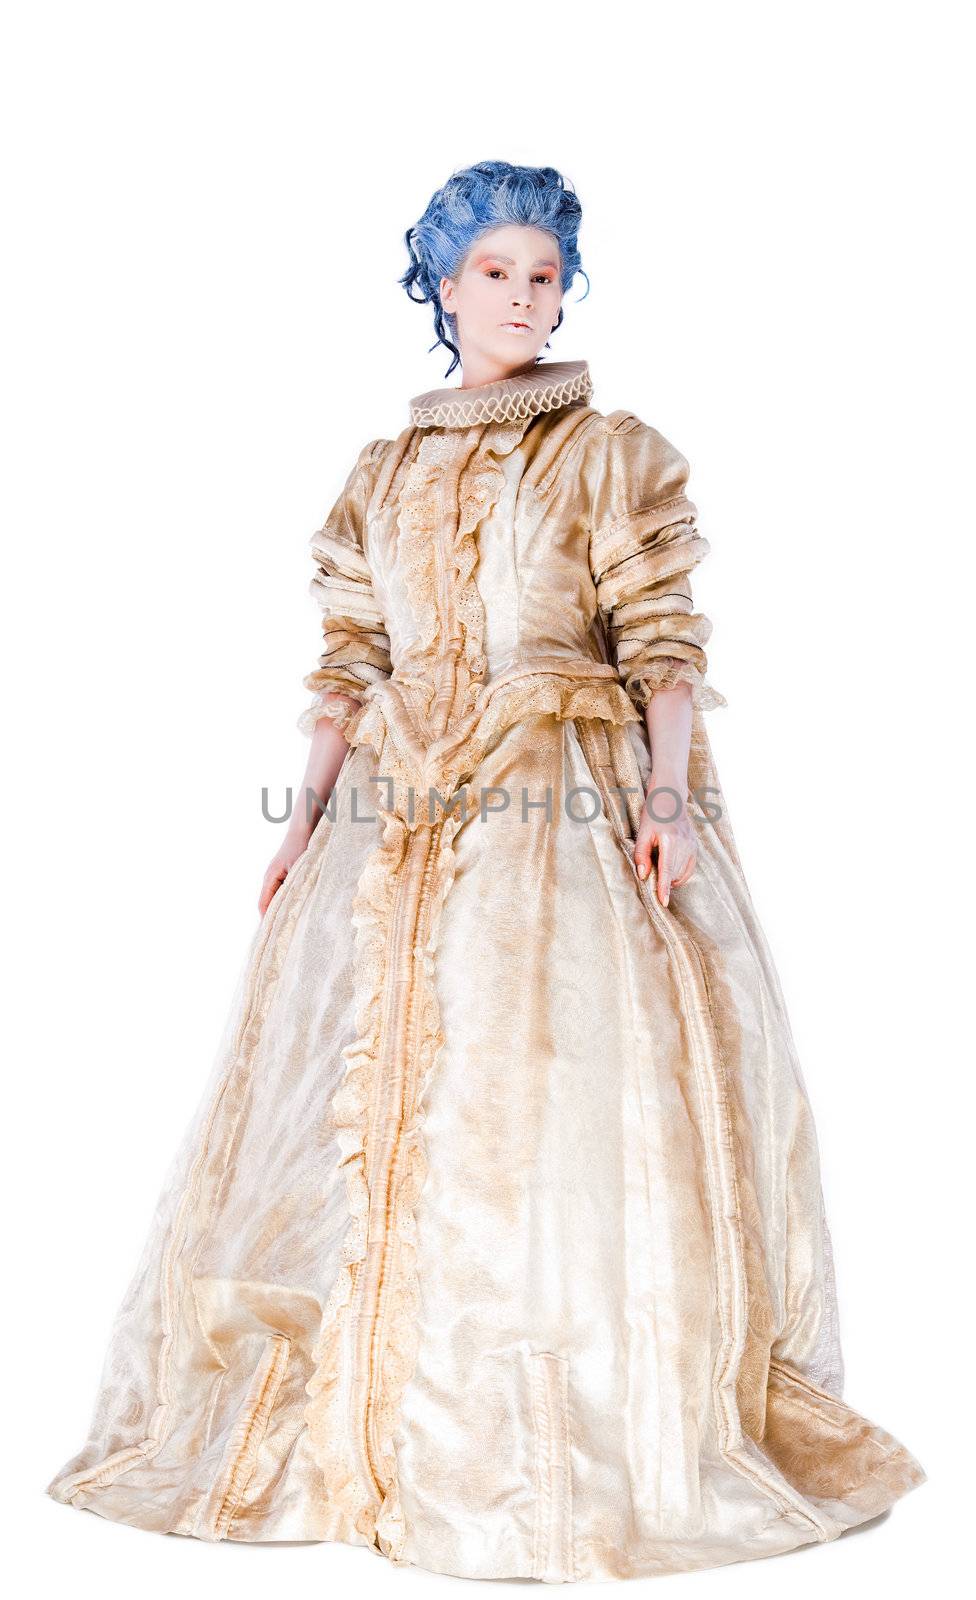 Woman in medieval dress by vilevi